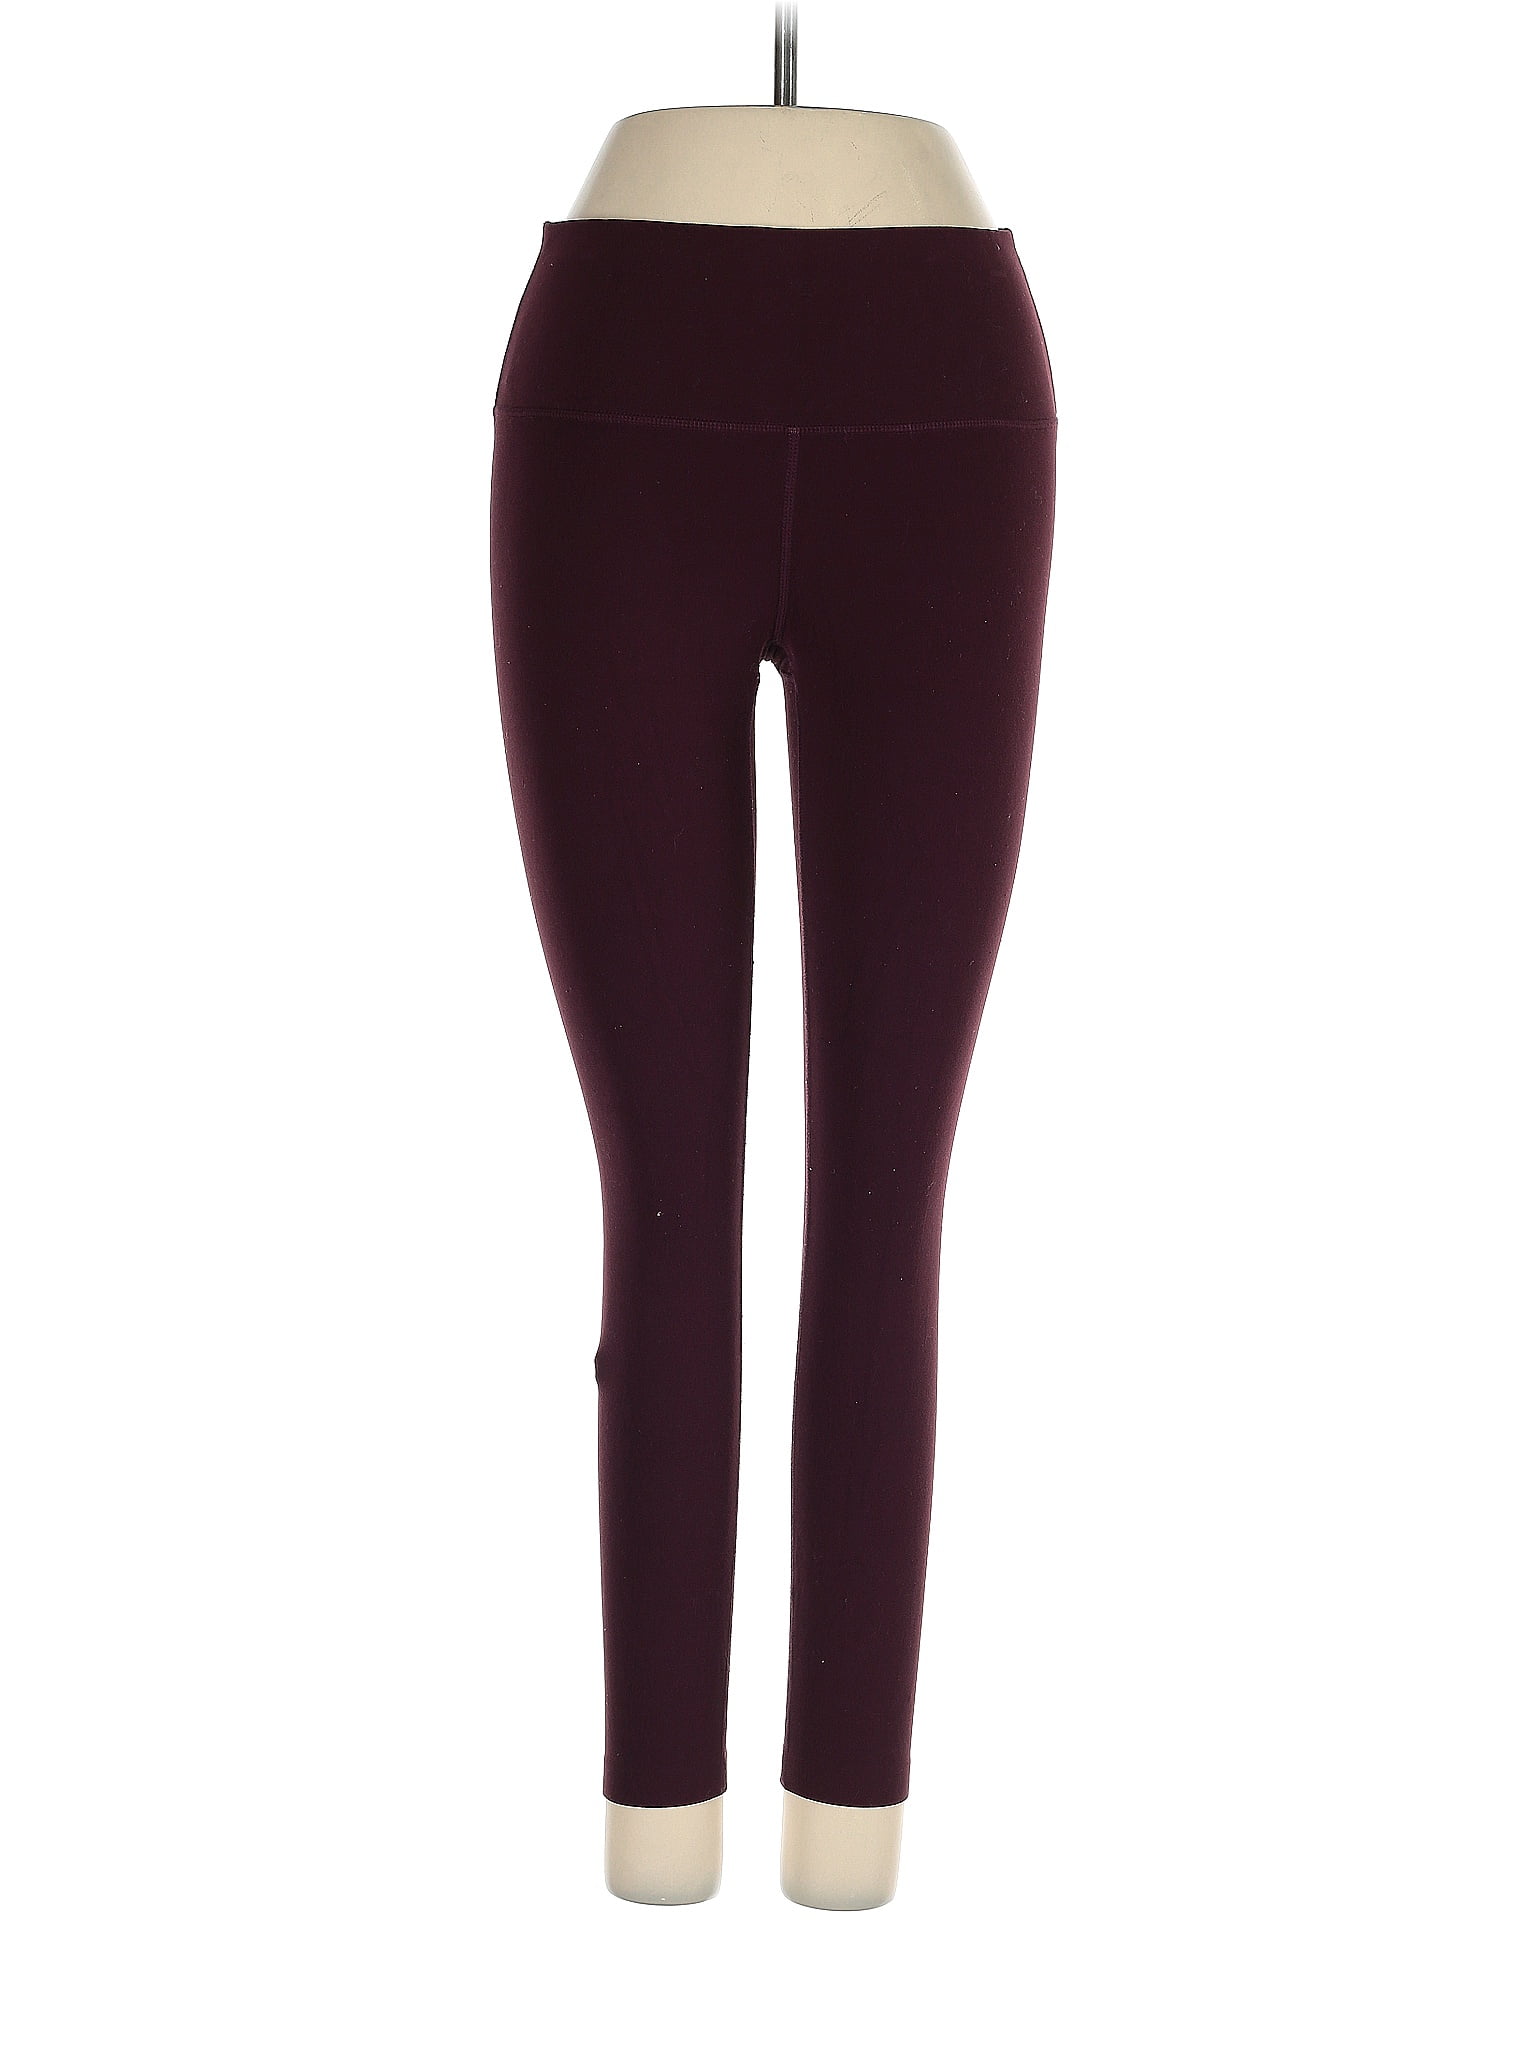 Athleta Burgundy Active Pants Size XS (Petite) - 59% off